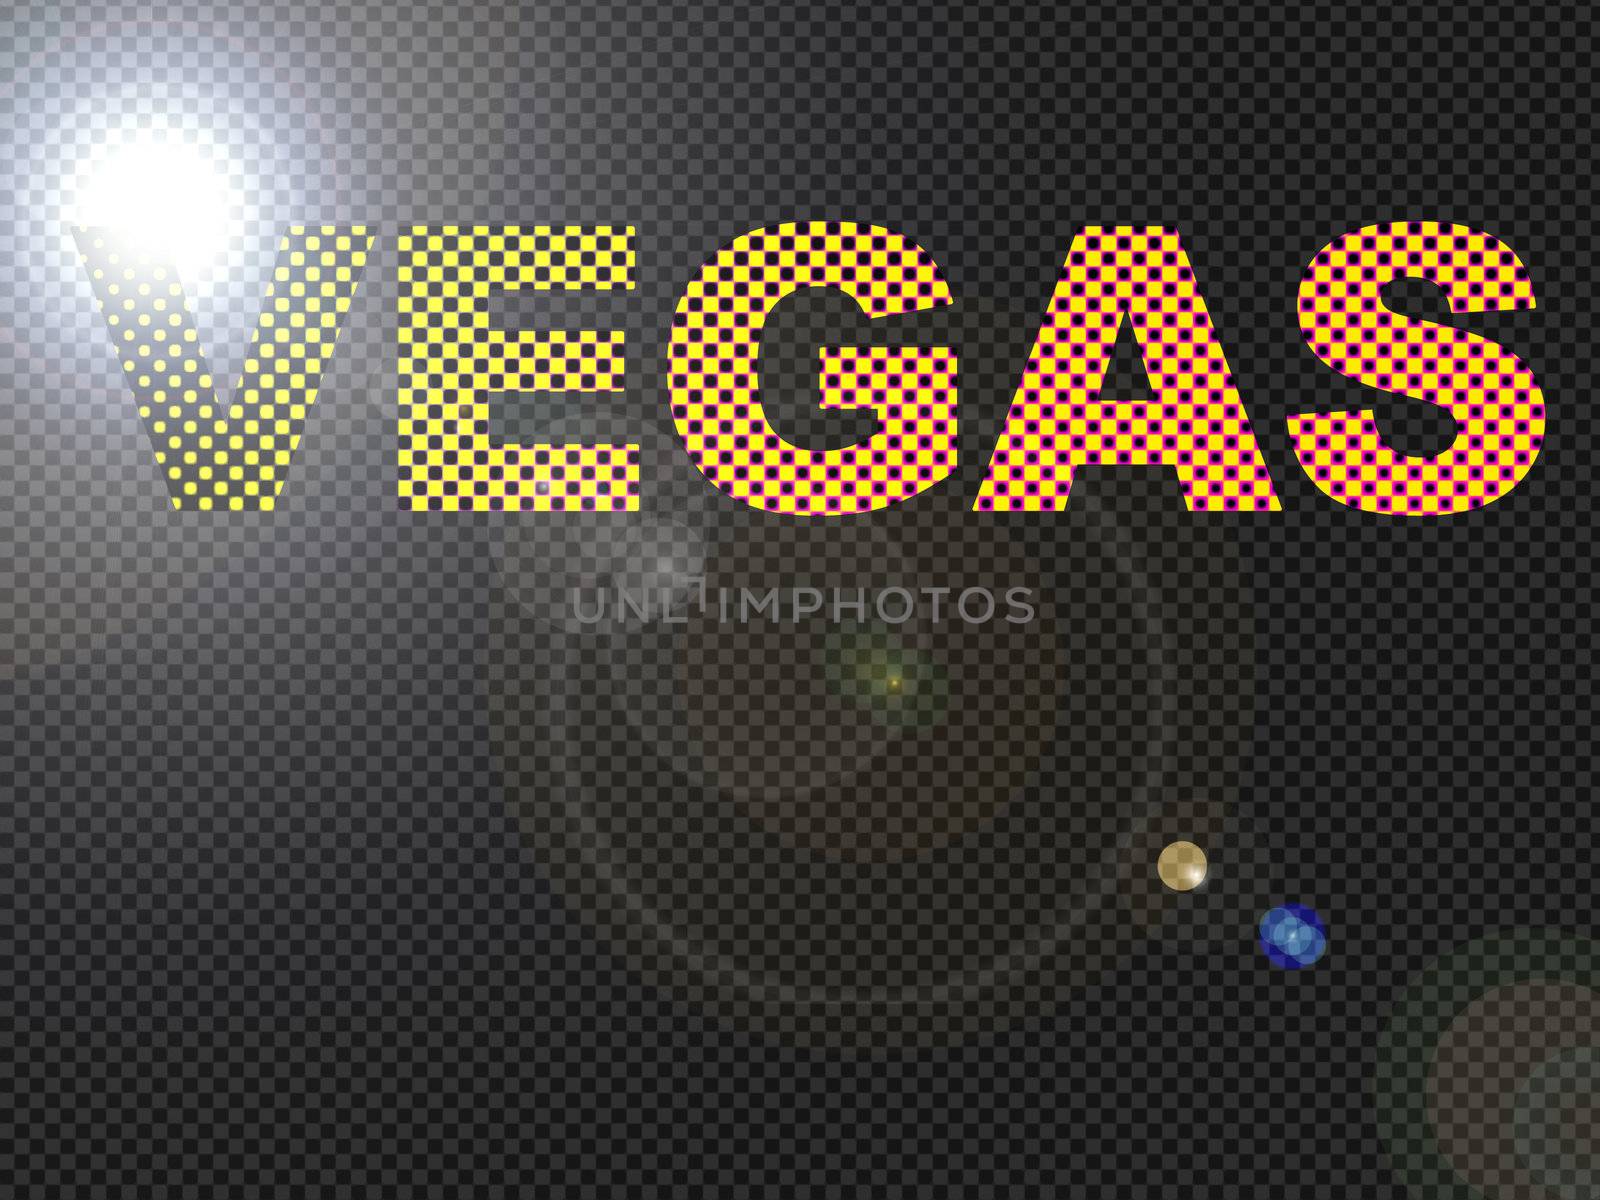 Dotted LED Lit Vegas Sign Glowing Bright Orange